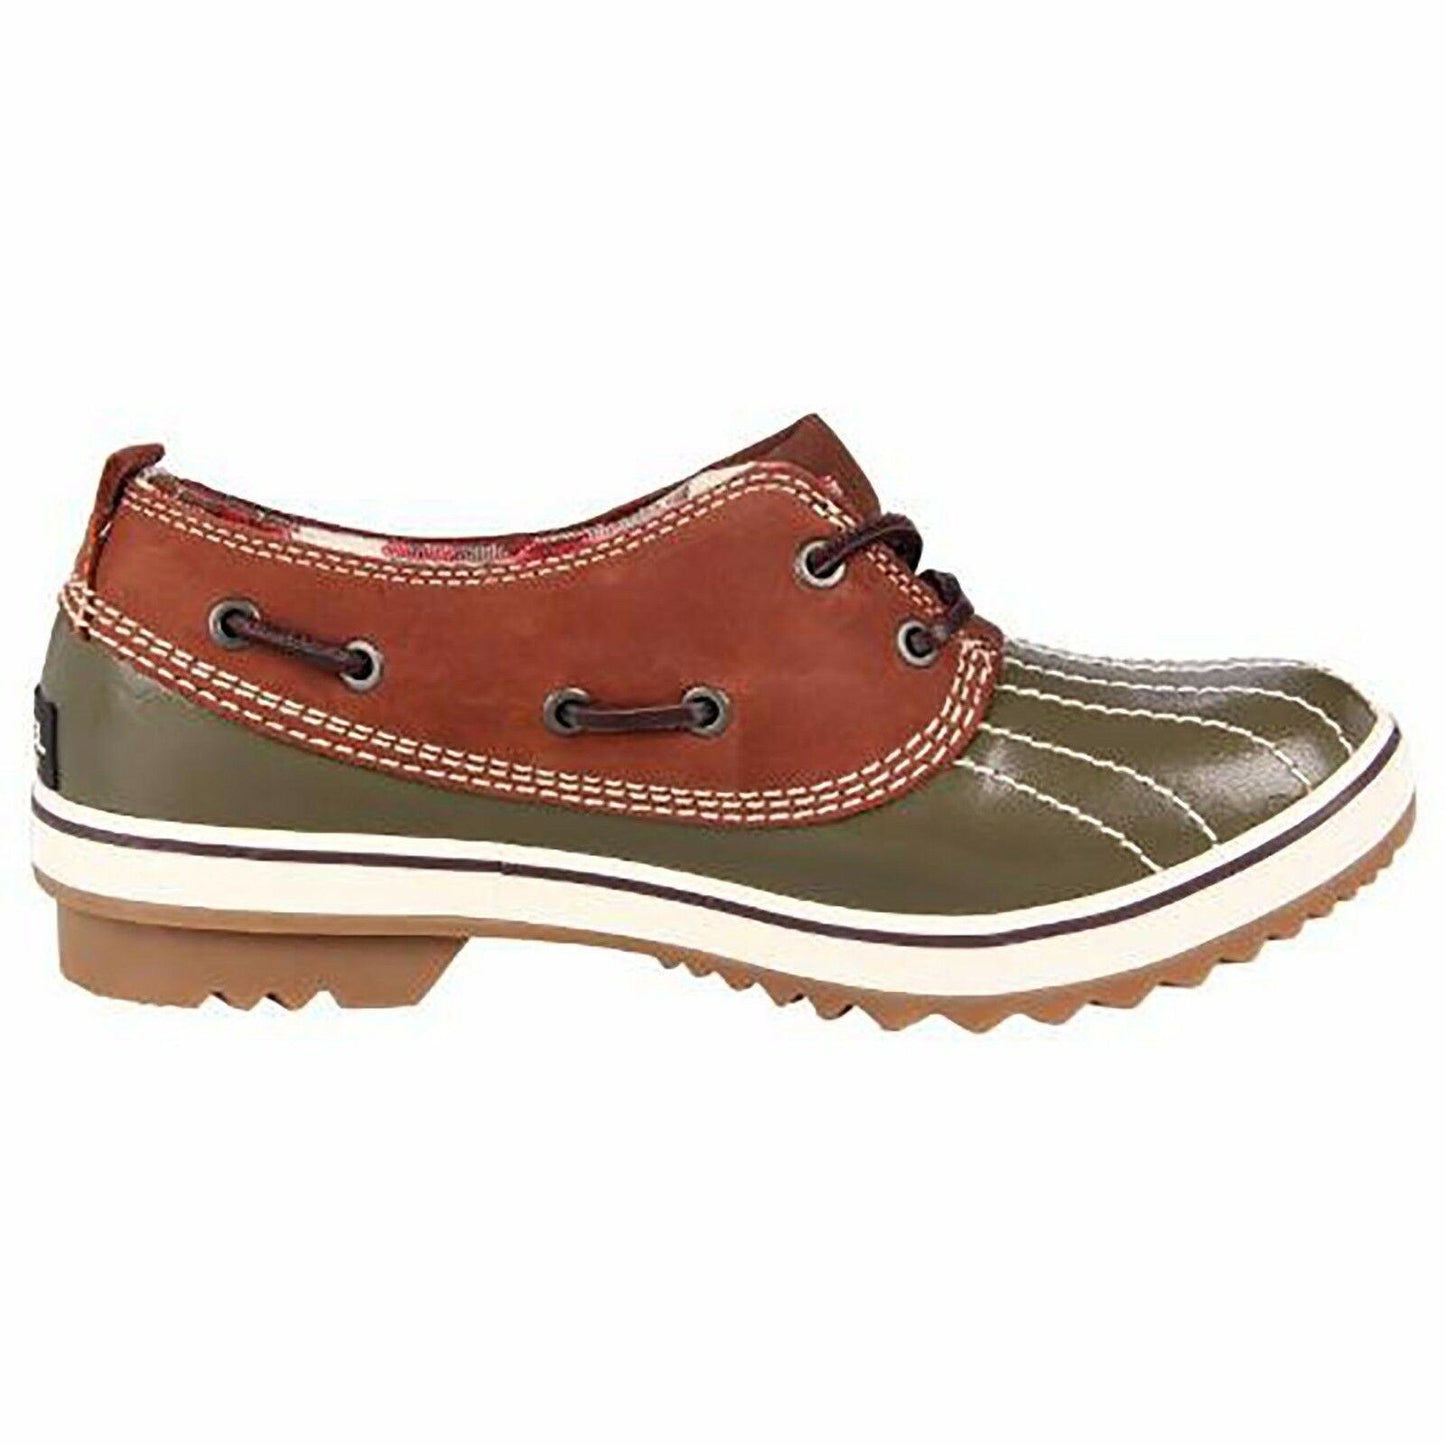 Sorel Tivoli Low Womens Winter Snow Brown Leather Waterproof Shoes Size 5 M - SVNYFancy